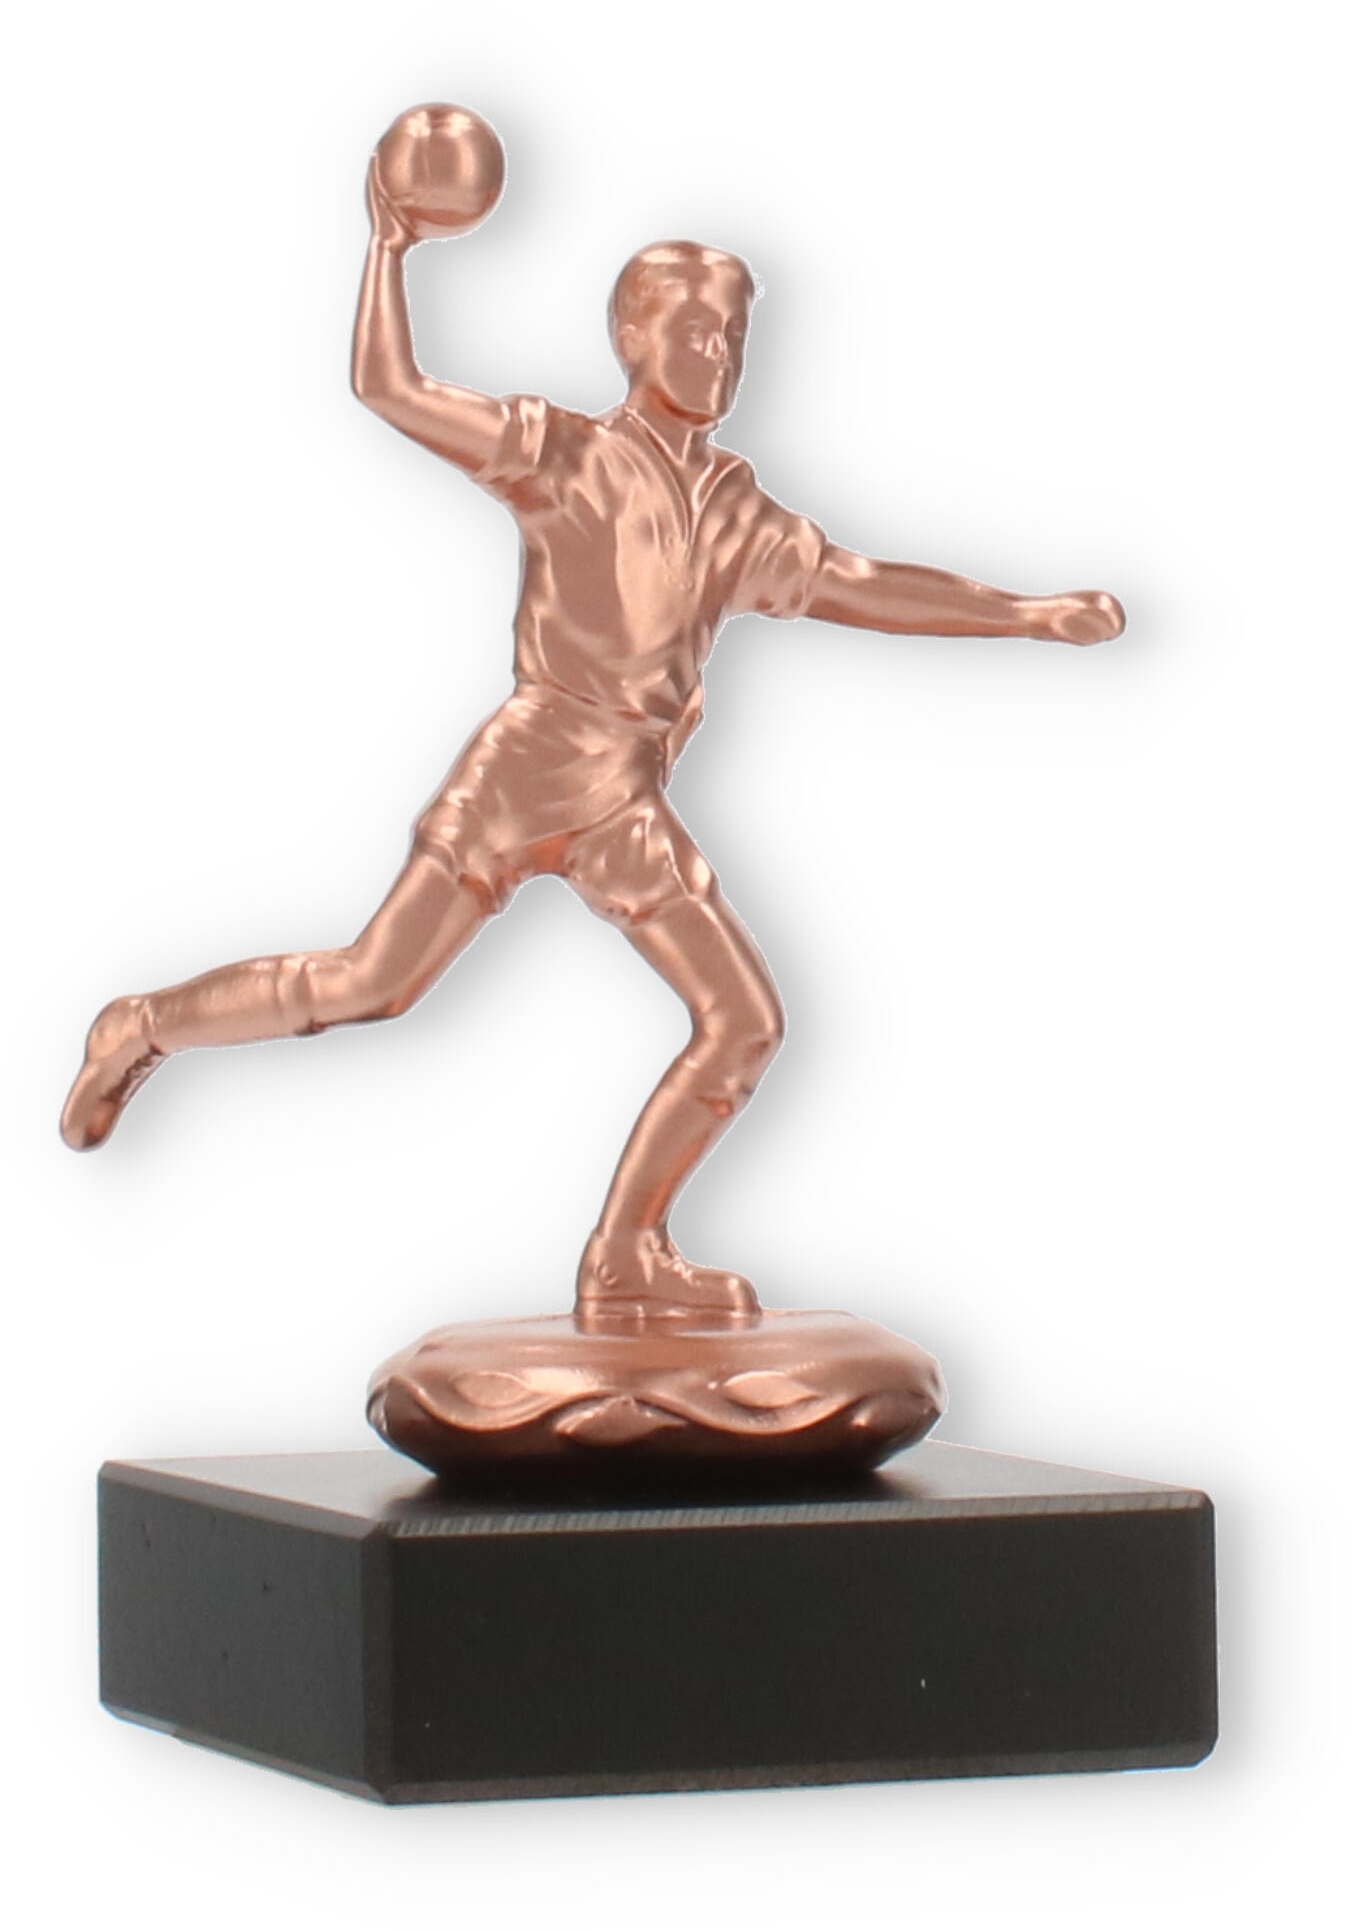 Pokal Metallfigur Handballspieler bronze auf schwarzem Marmorsockel 11,0cm